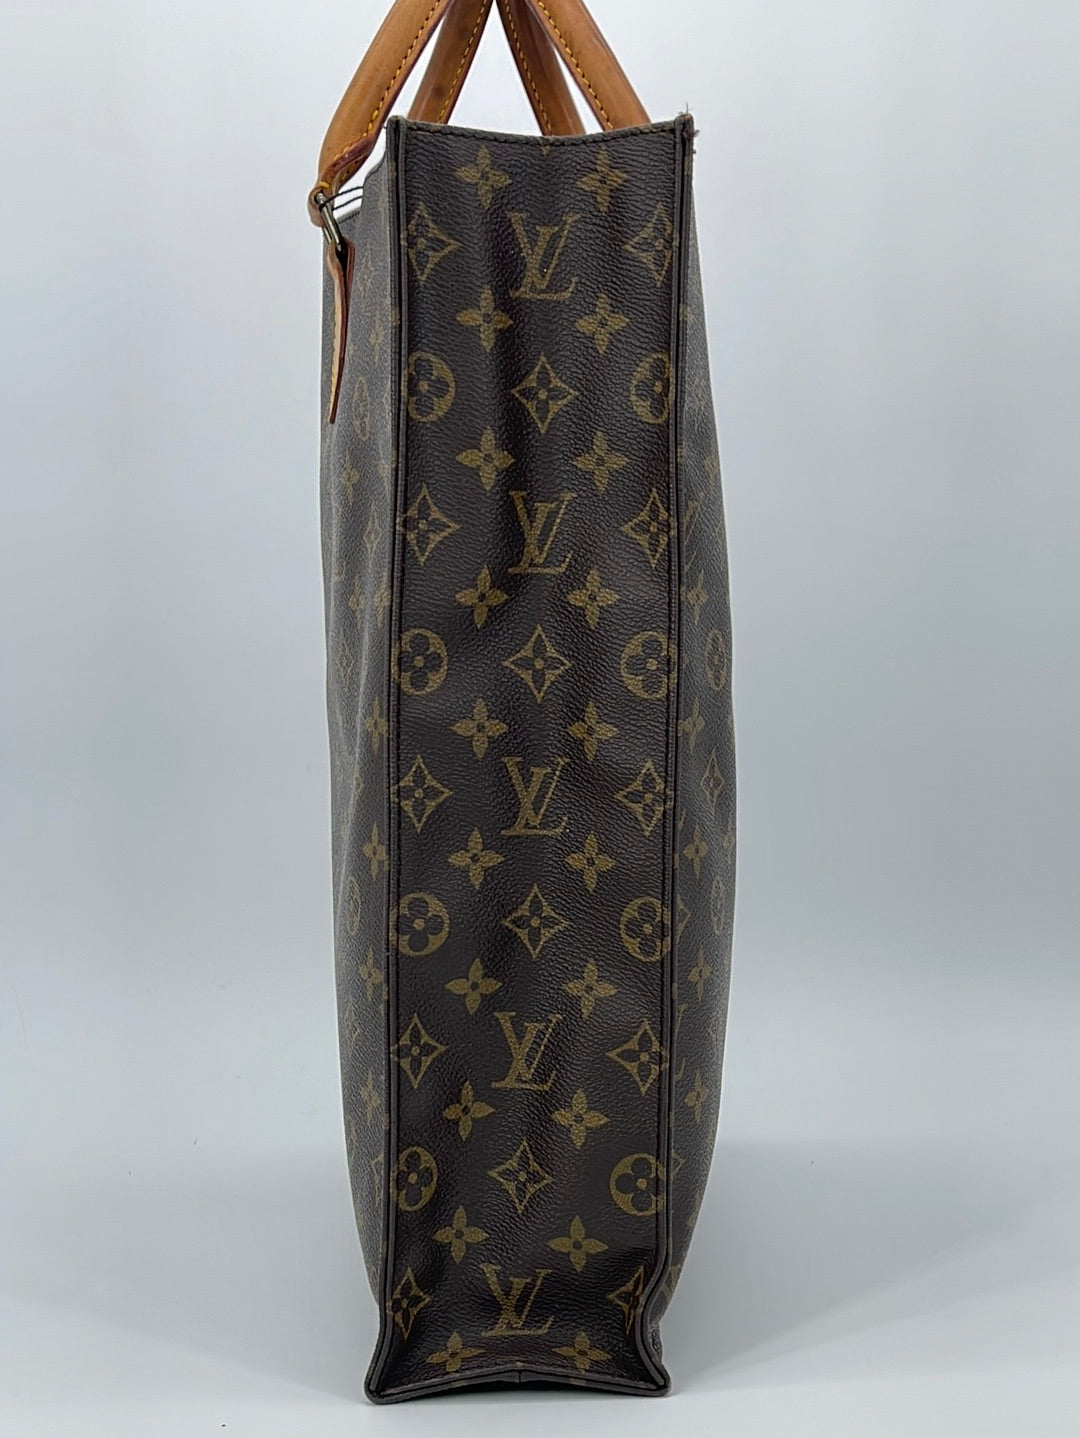 Preloved Louis Vuitton Monogram Leather Sac Plat Tote MI9001 040823 - –  KimmieBBags LLC